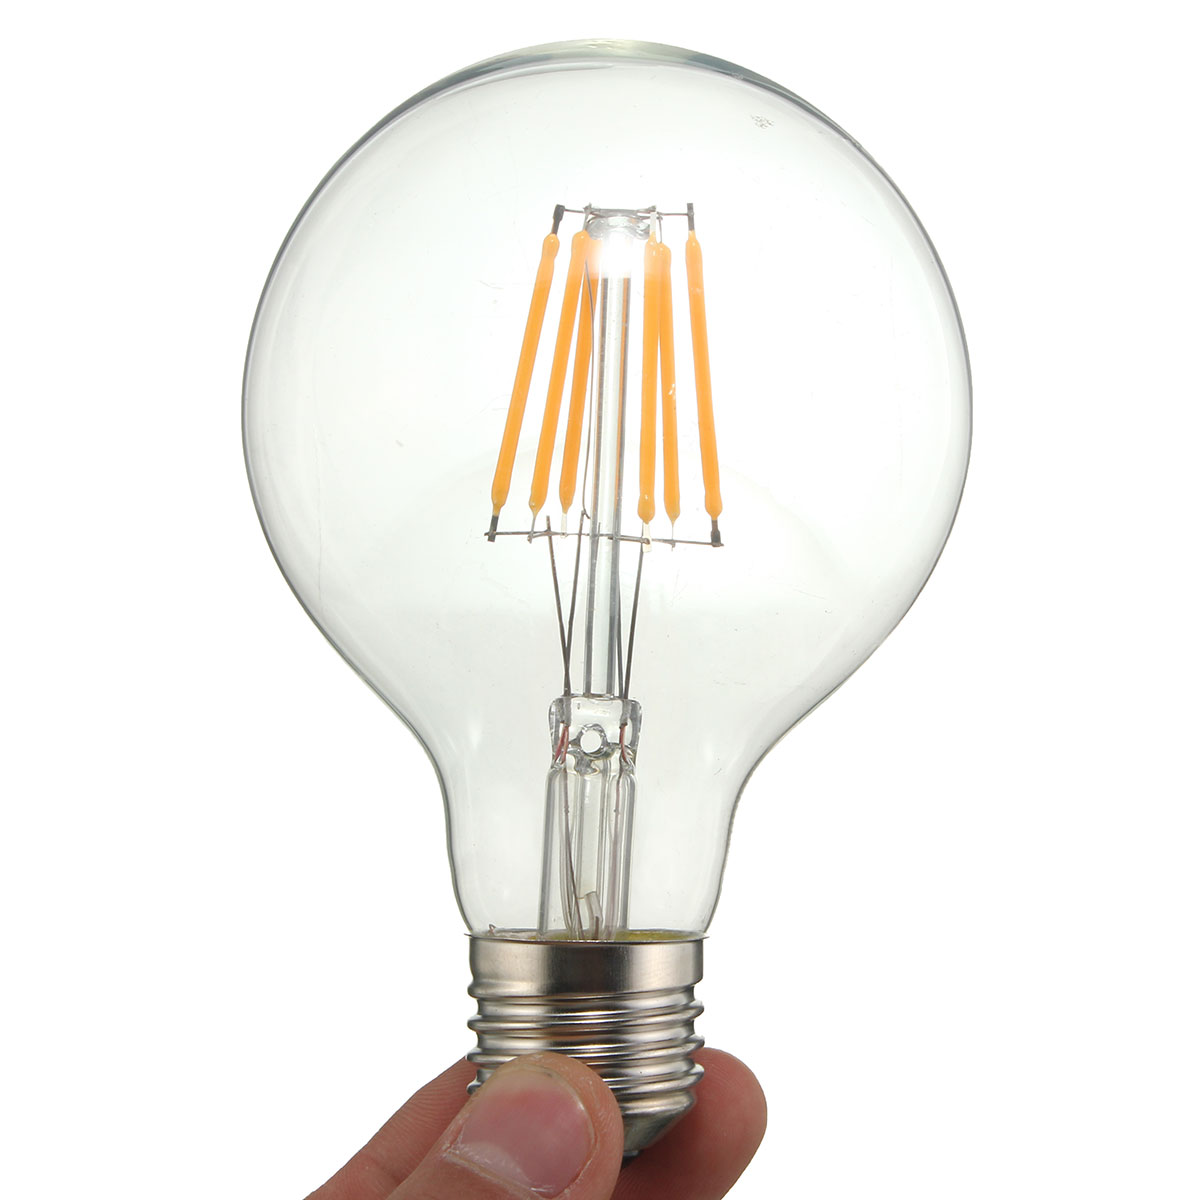 Dimmable-G80-E27-6W-COB-Warm-White-600Lumens-Retro-Vintage-Light-Lamp-Bulb-AC110V-AC220V-1074483-7